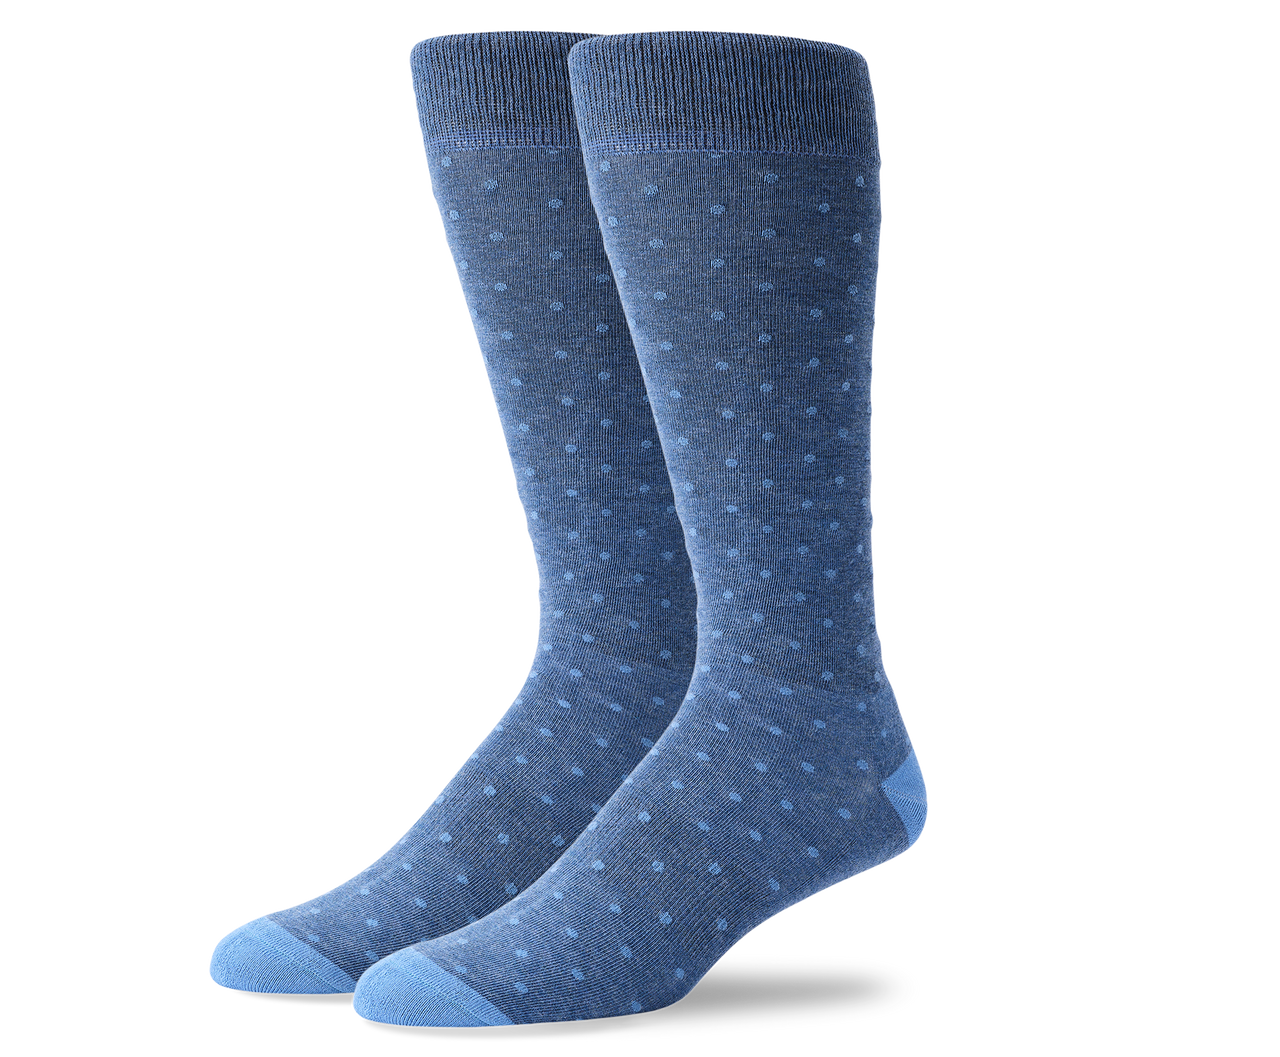 Start-up Mack Weldon sells socks that don't stink — and it's making millions